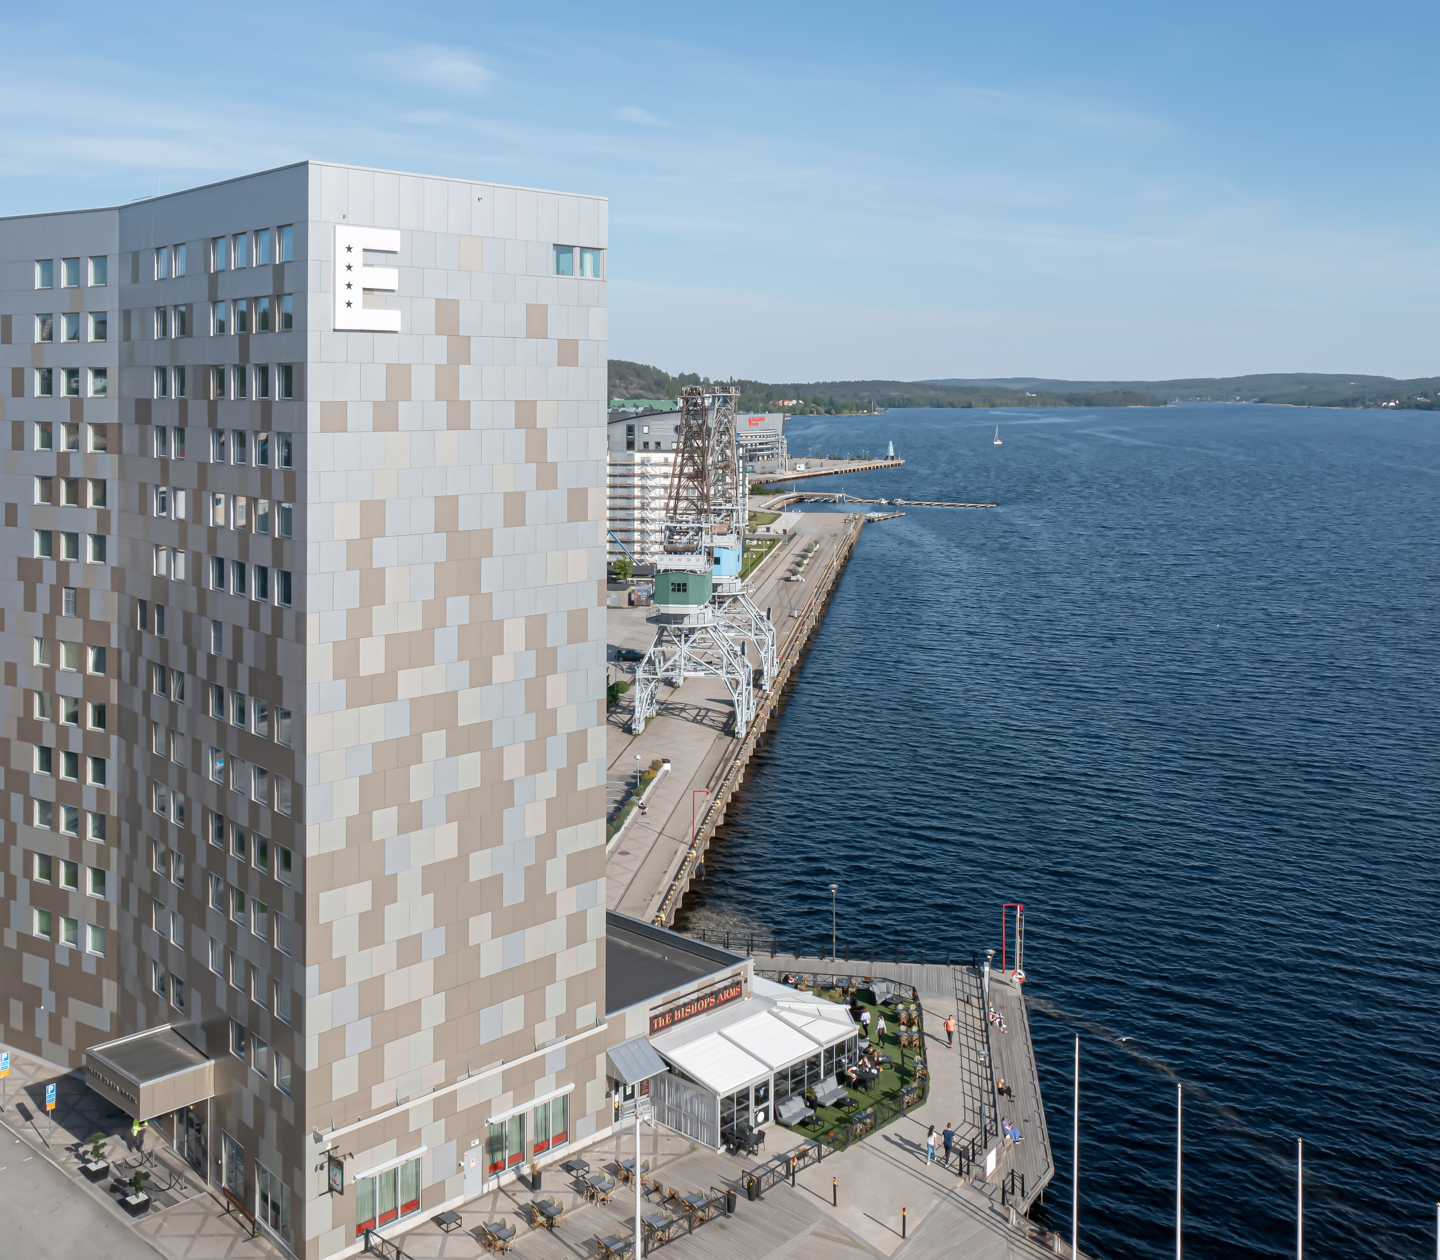 The facade of the Elite Plaza Hotel in Örnsköldsvik with the Bothnian Sea behind